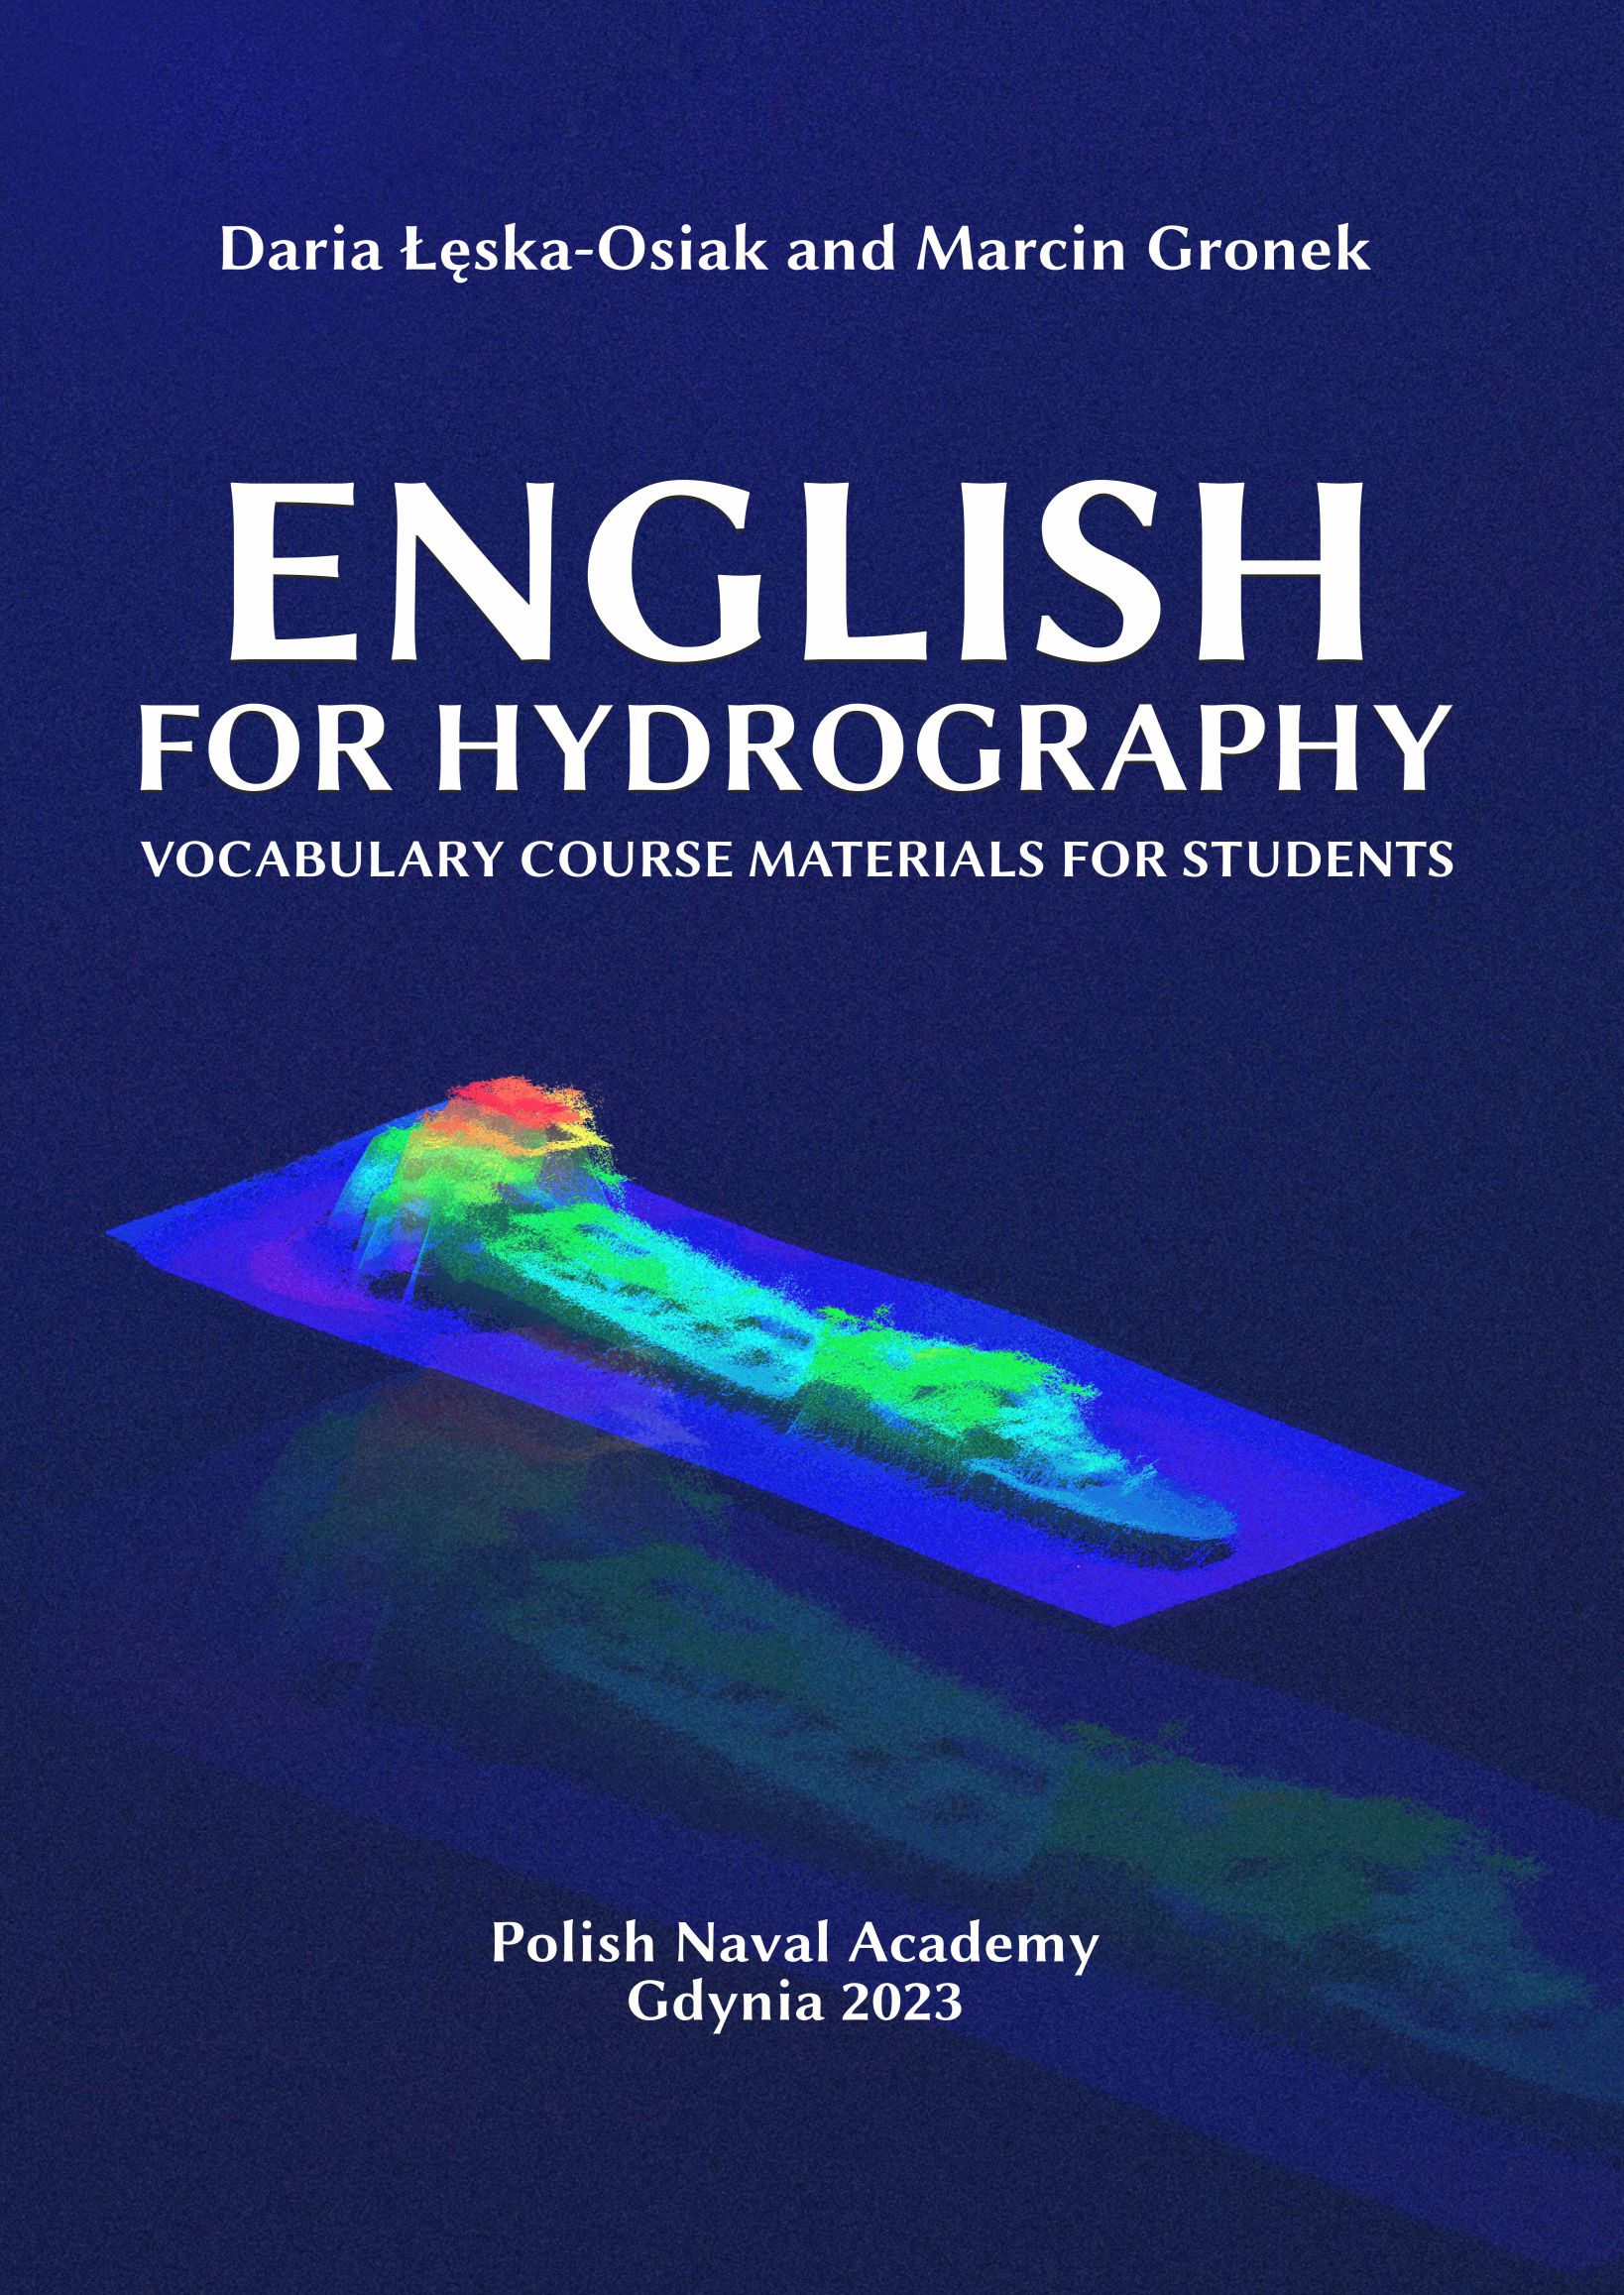 English for hydrograpfy v4